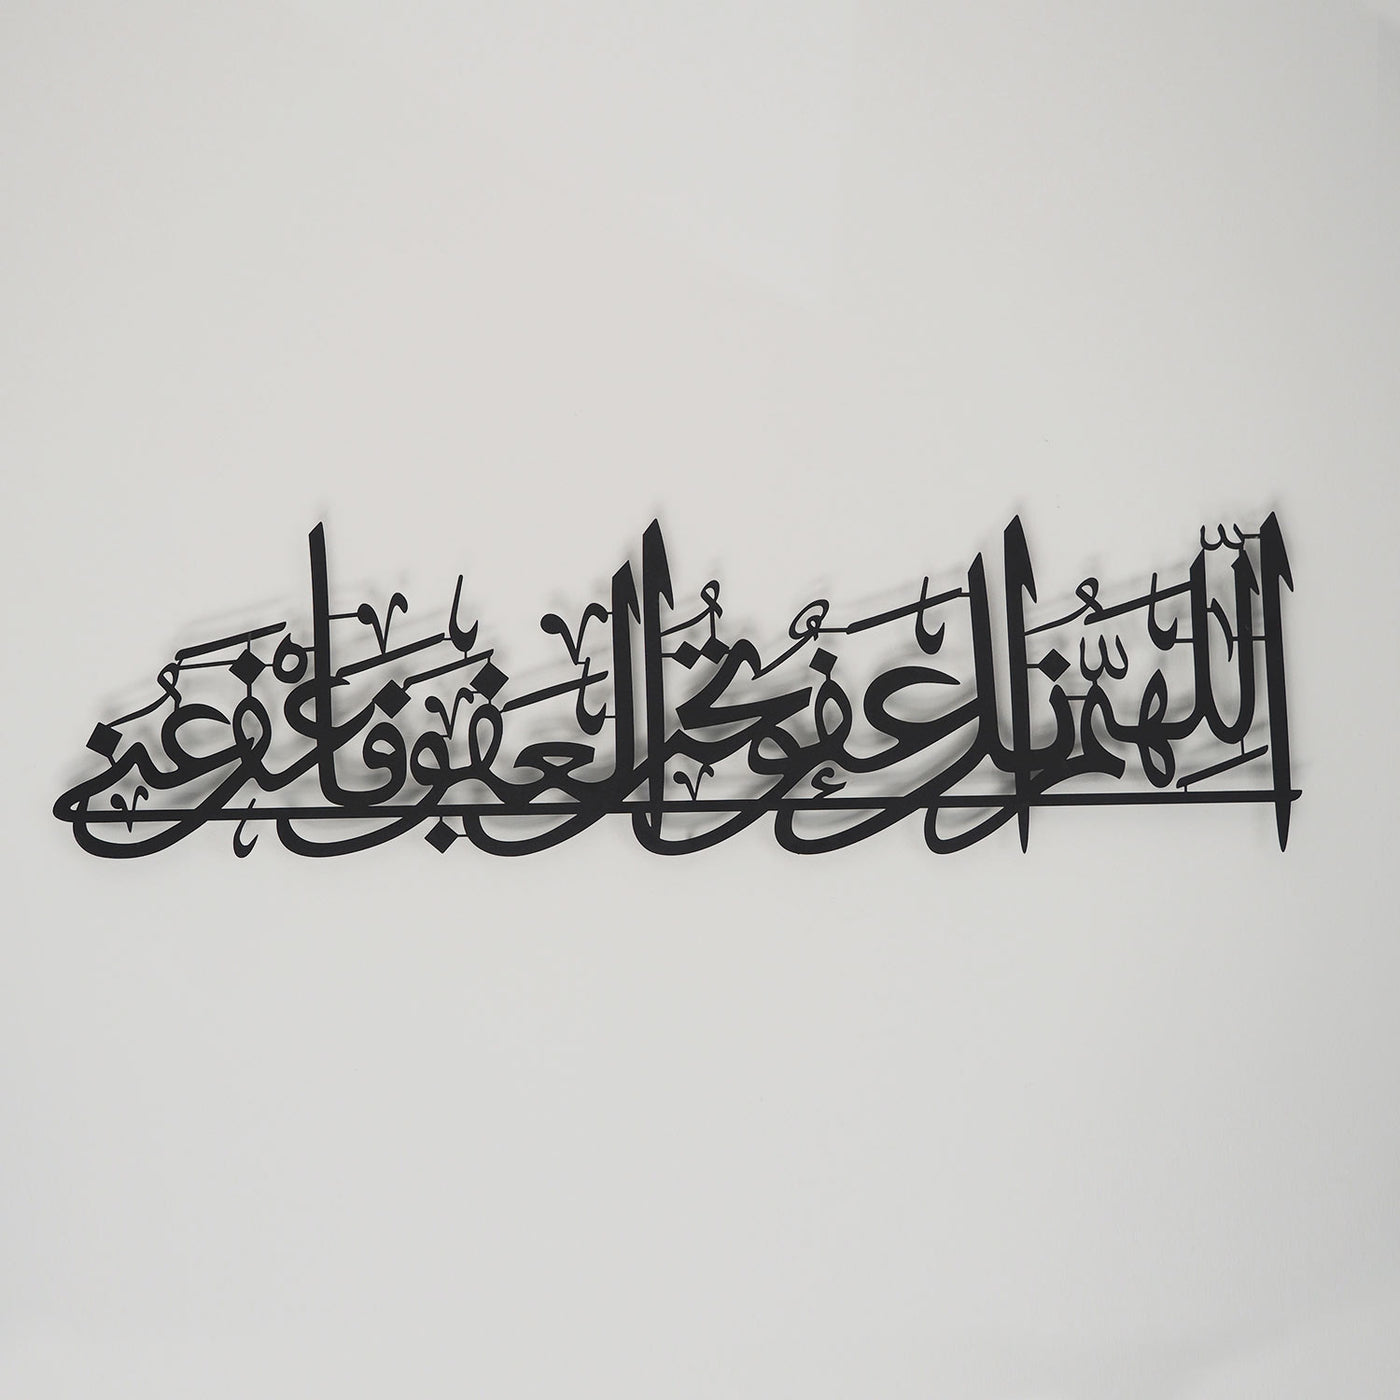 "Allah’ım sen affedicisin, , affetmeyi seversin, beni de affet." - Kadir Gecesi Duası (Mağfiret) Metal Duvar Tablosu - WAM194